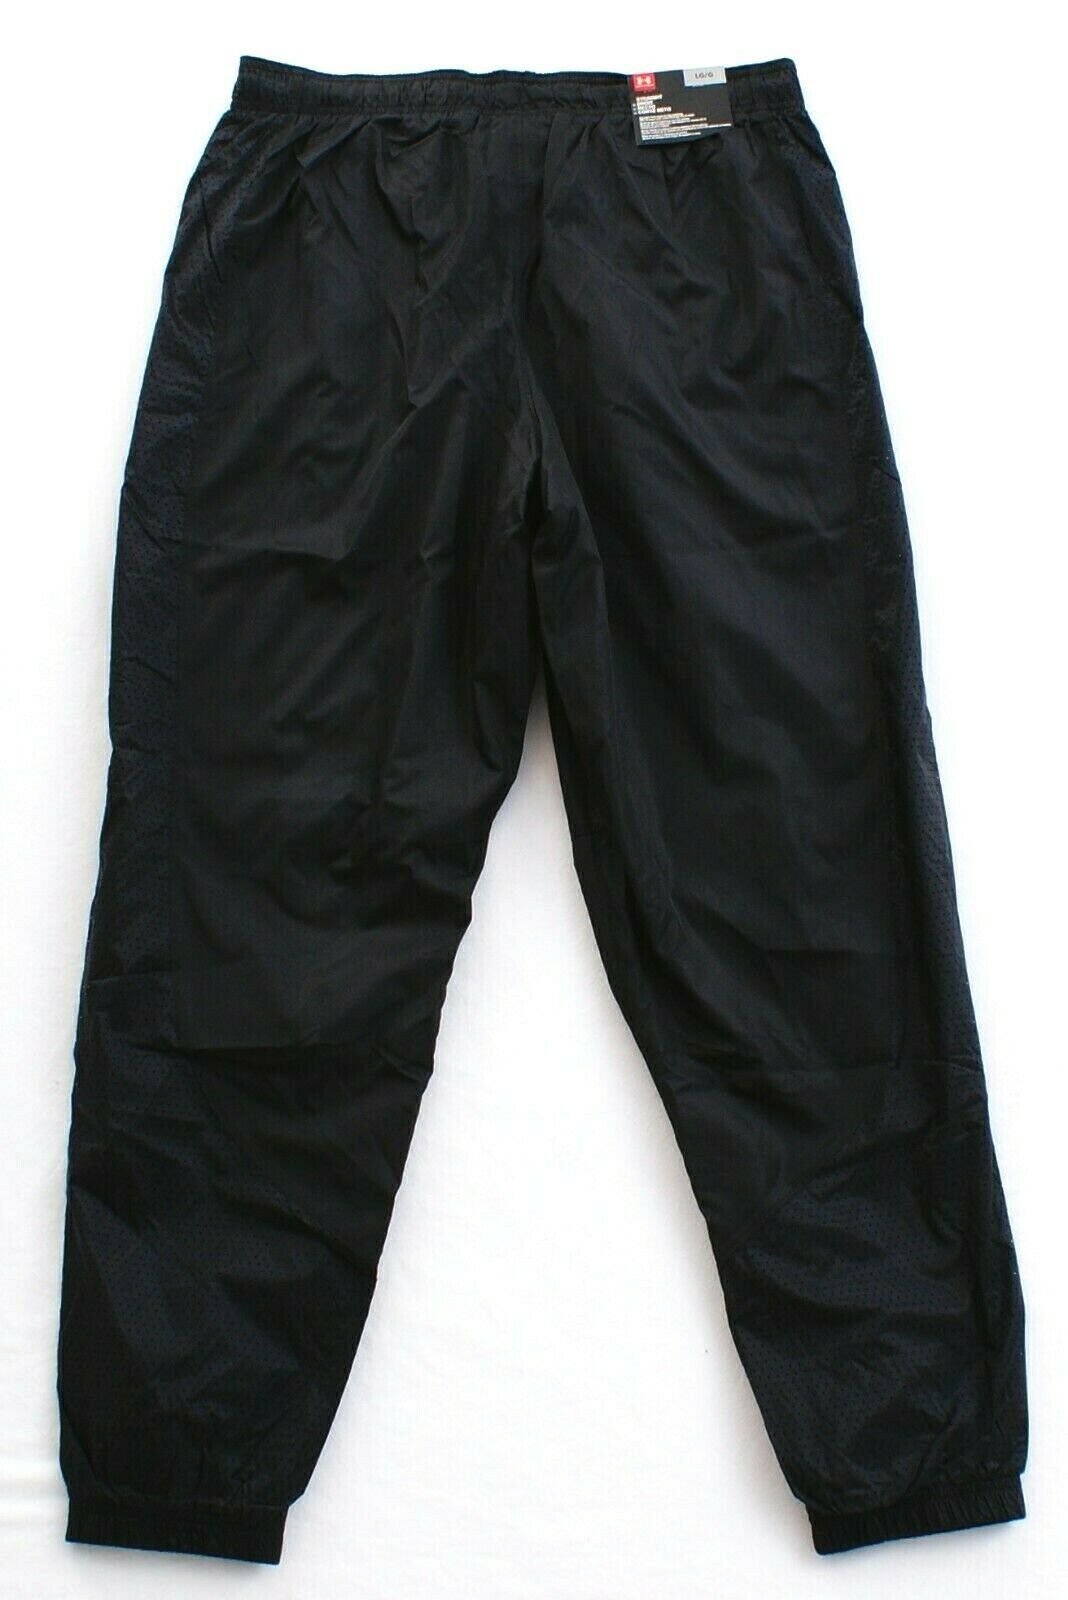 Under Armour Black UA Sportstyle Mesh Lined Wind Pants Men's NWT - Pants